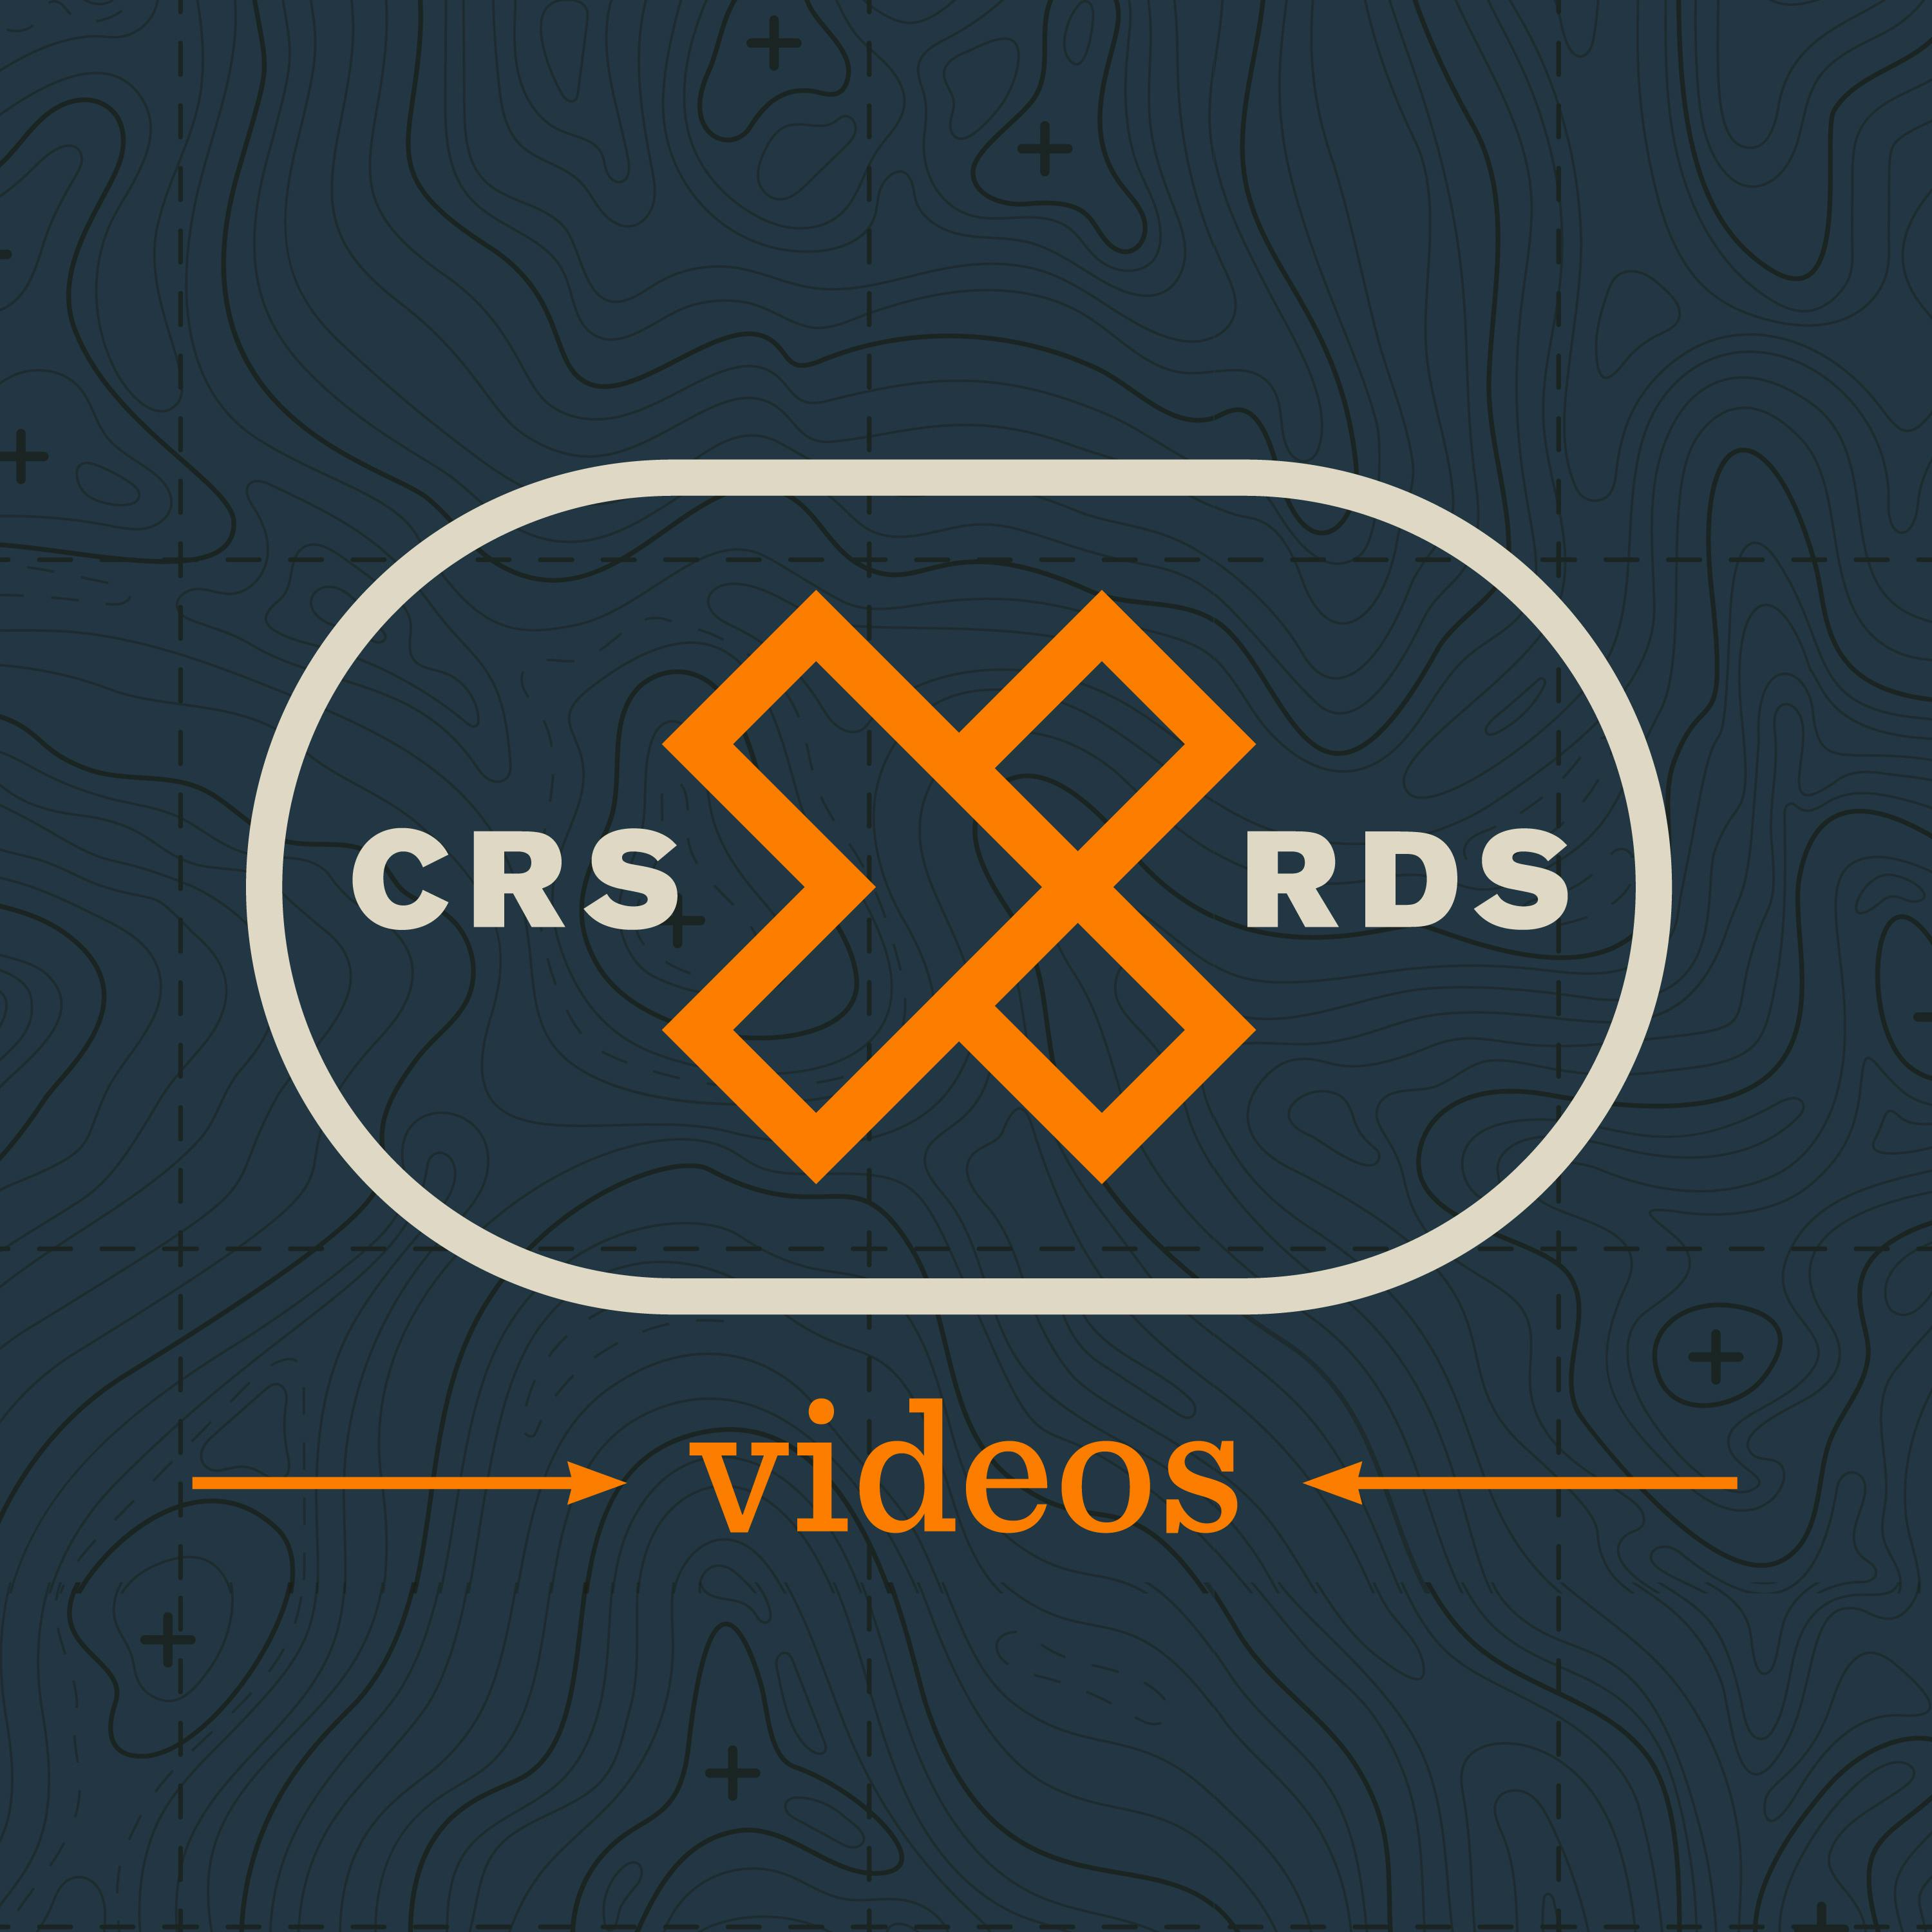 Crossroads Videos